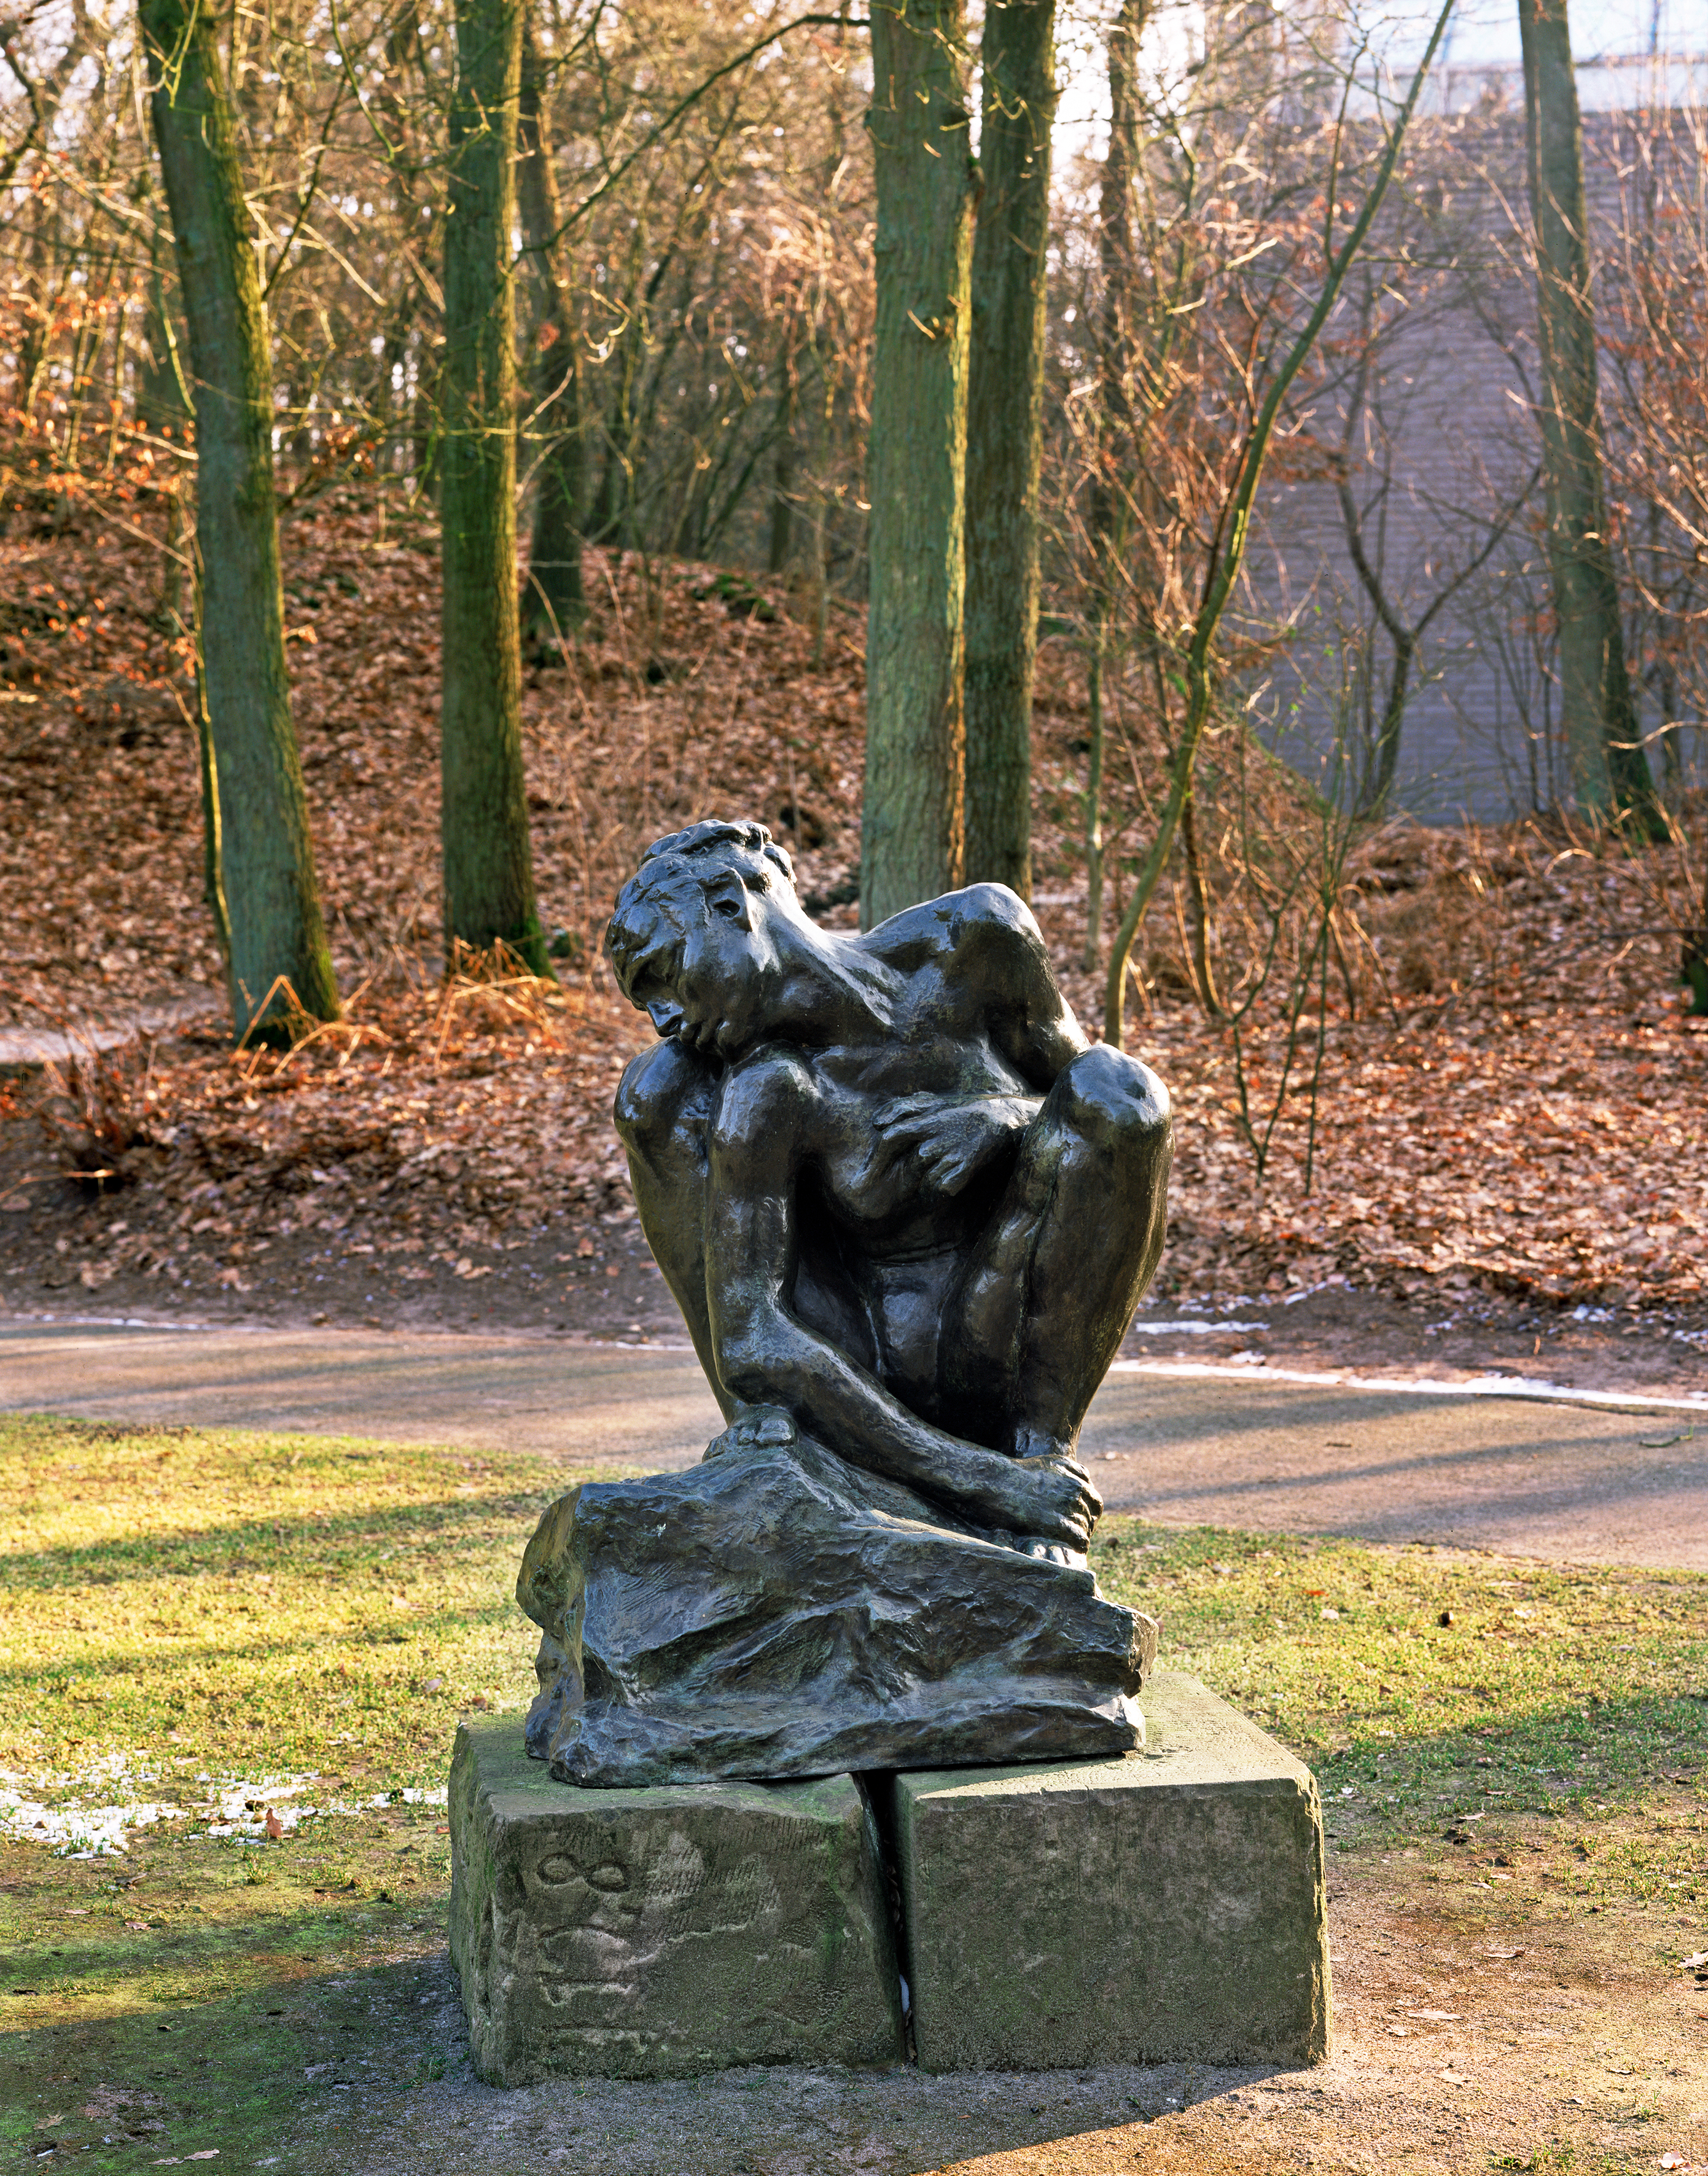 Guggoló nő by Auguste Rodin - 1882 - 96 x 69 x 59 cm 